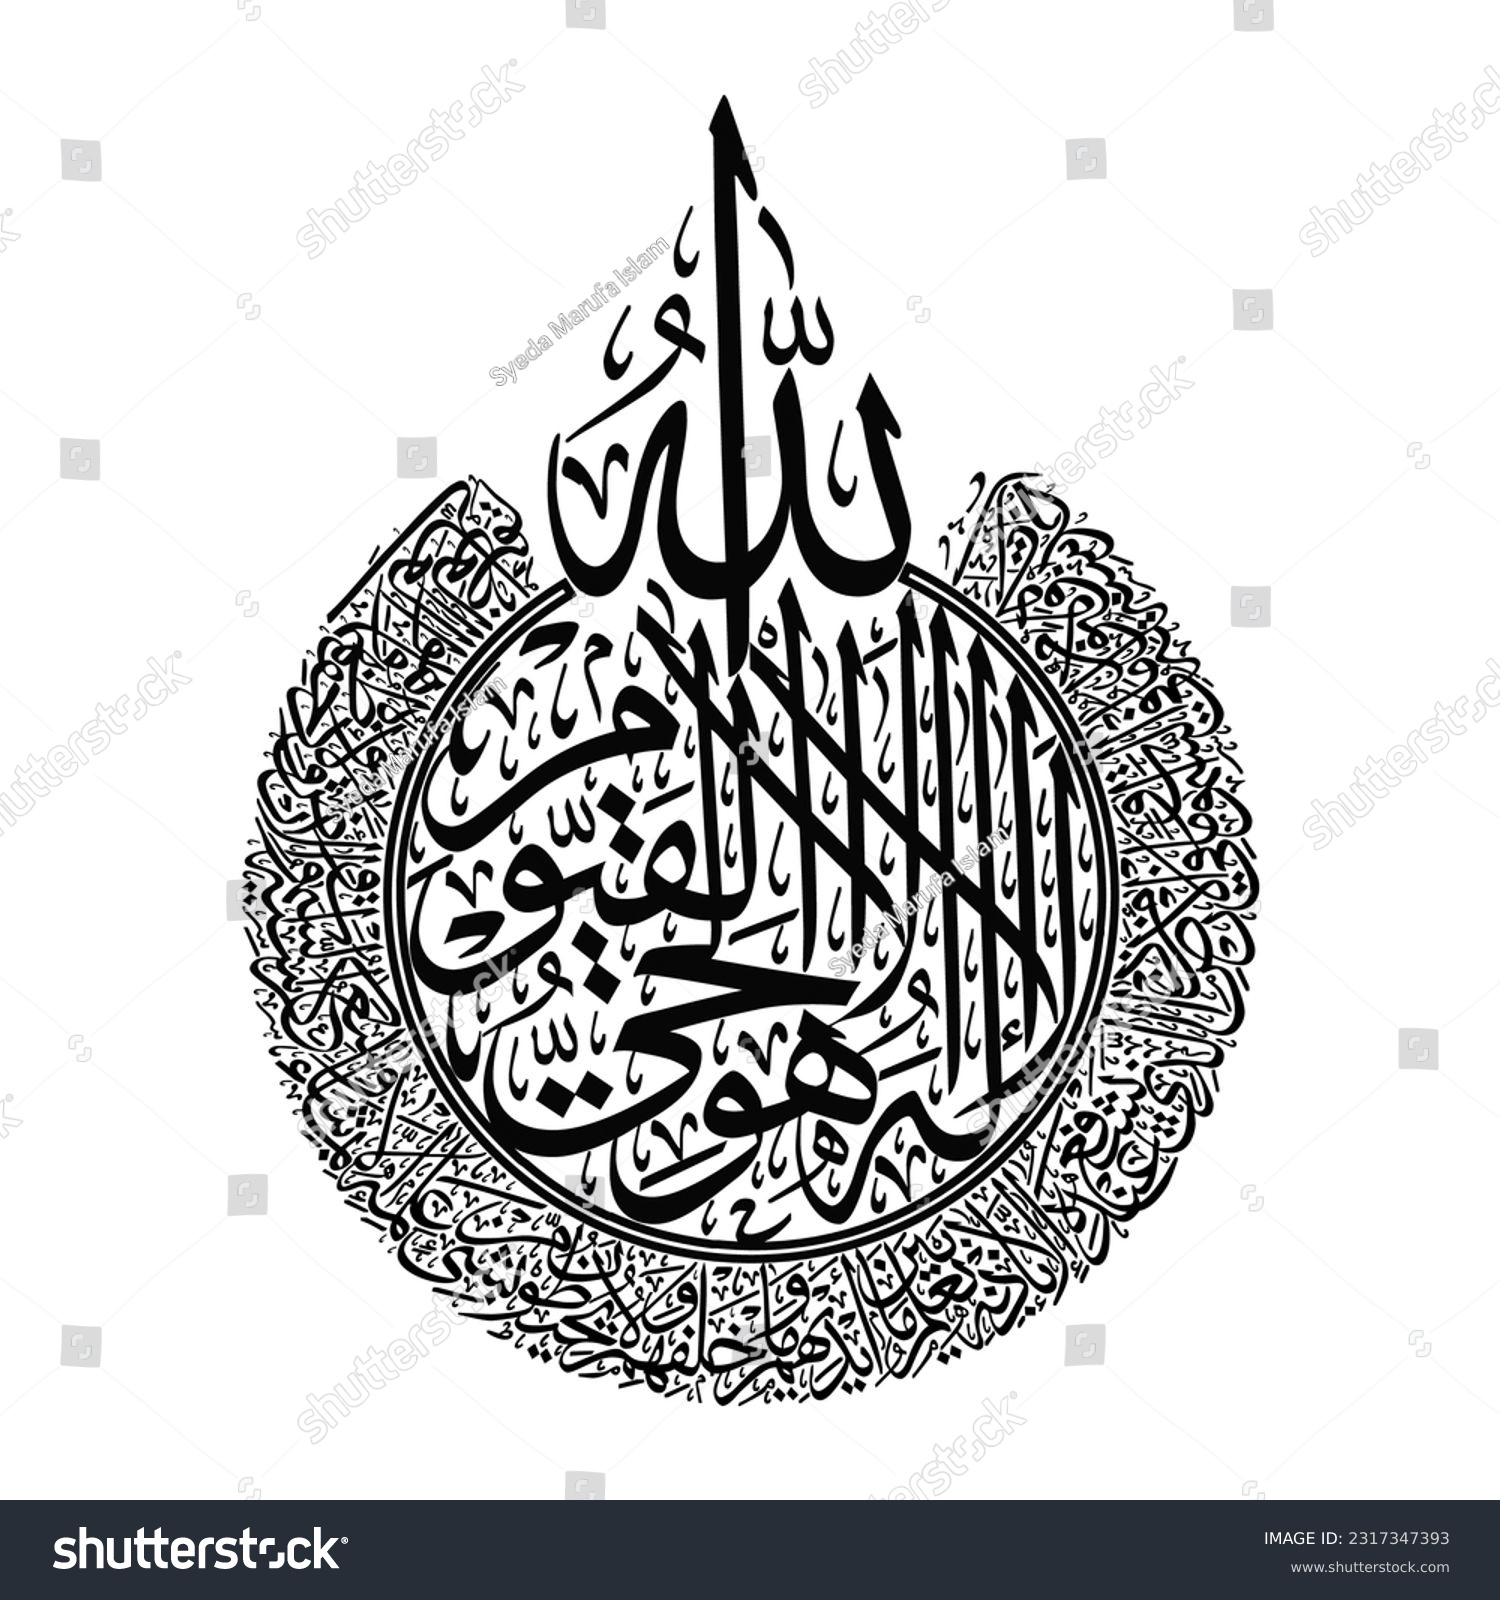 SVG of Arabic ayat al kursi calligraphy vector image svg